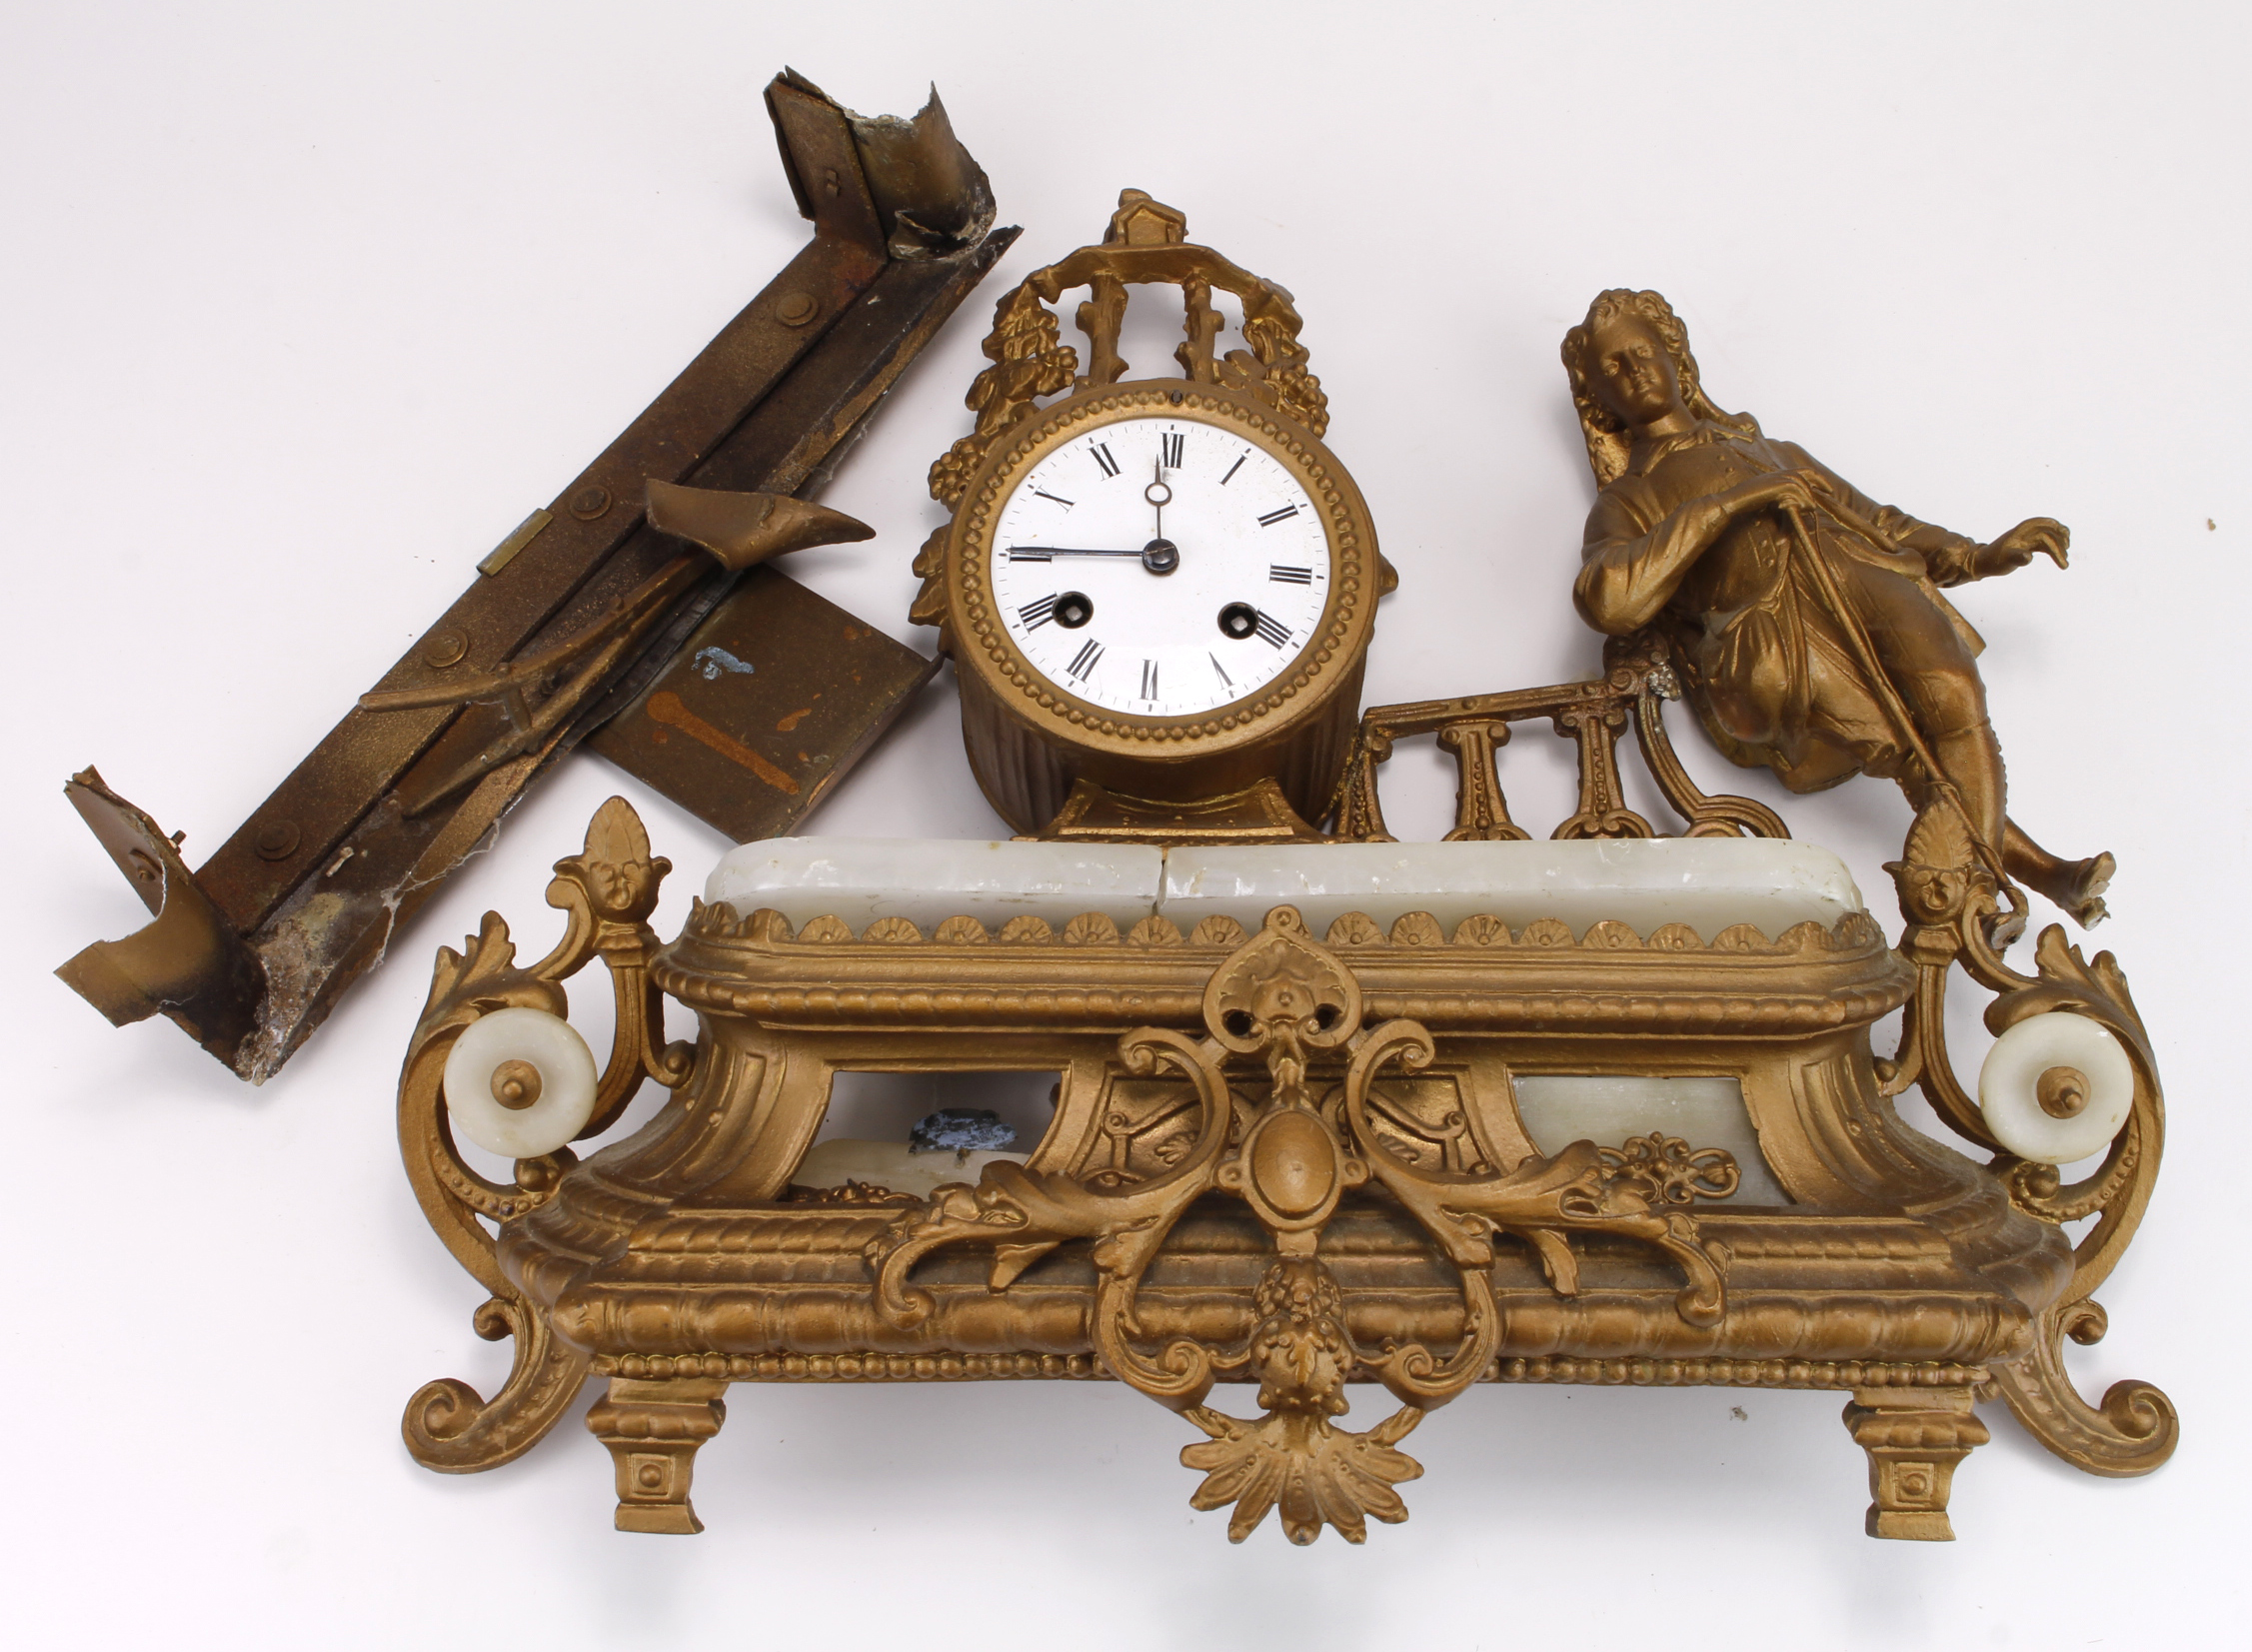 Gilt Ormolu mantel clock (damaged, restoration project), sold as seen